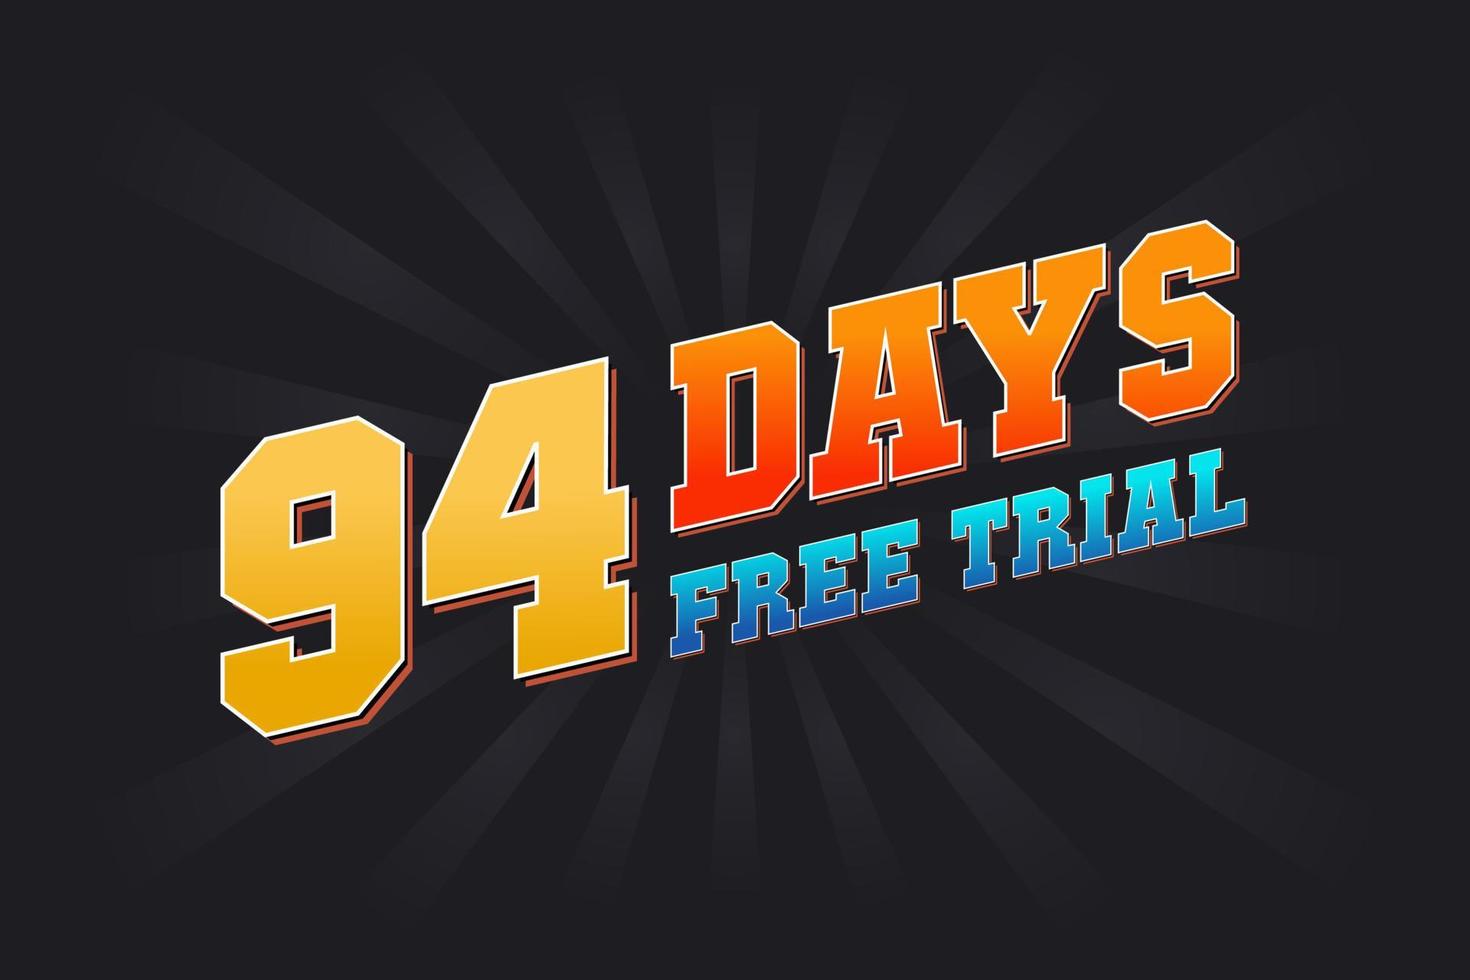 Vector de stock de texto en negrita promocional de prueba gratuita de 94 días